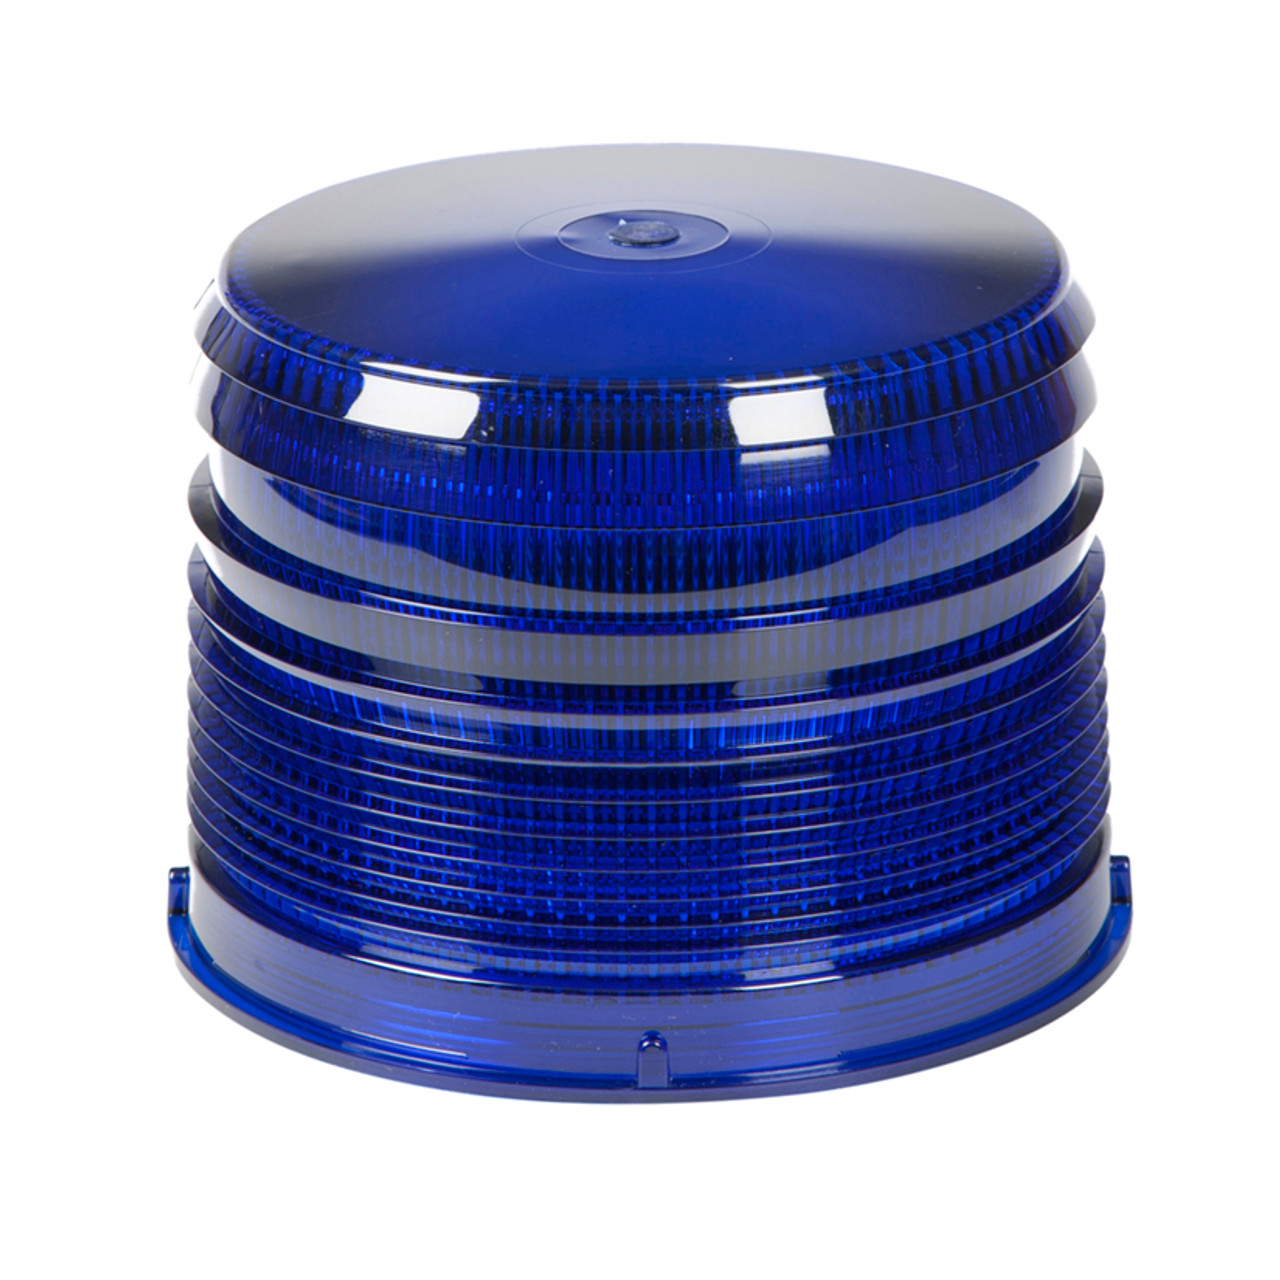 Beacon Replacement Lens - Blue  98225